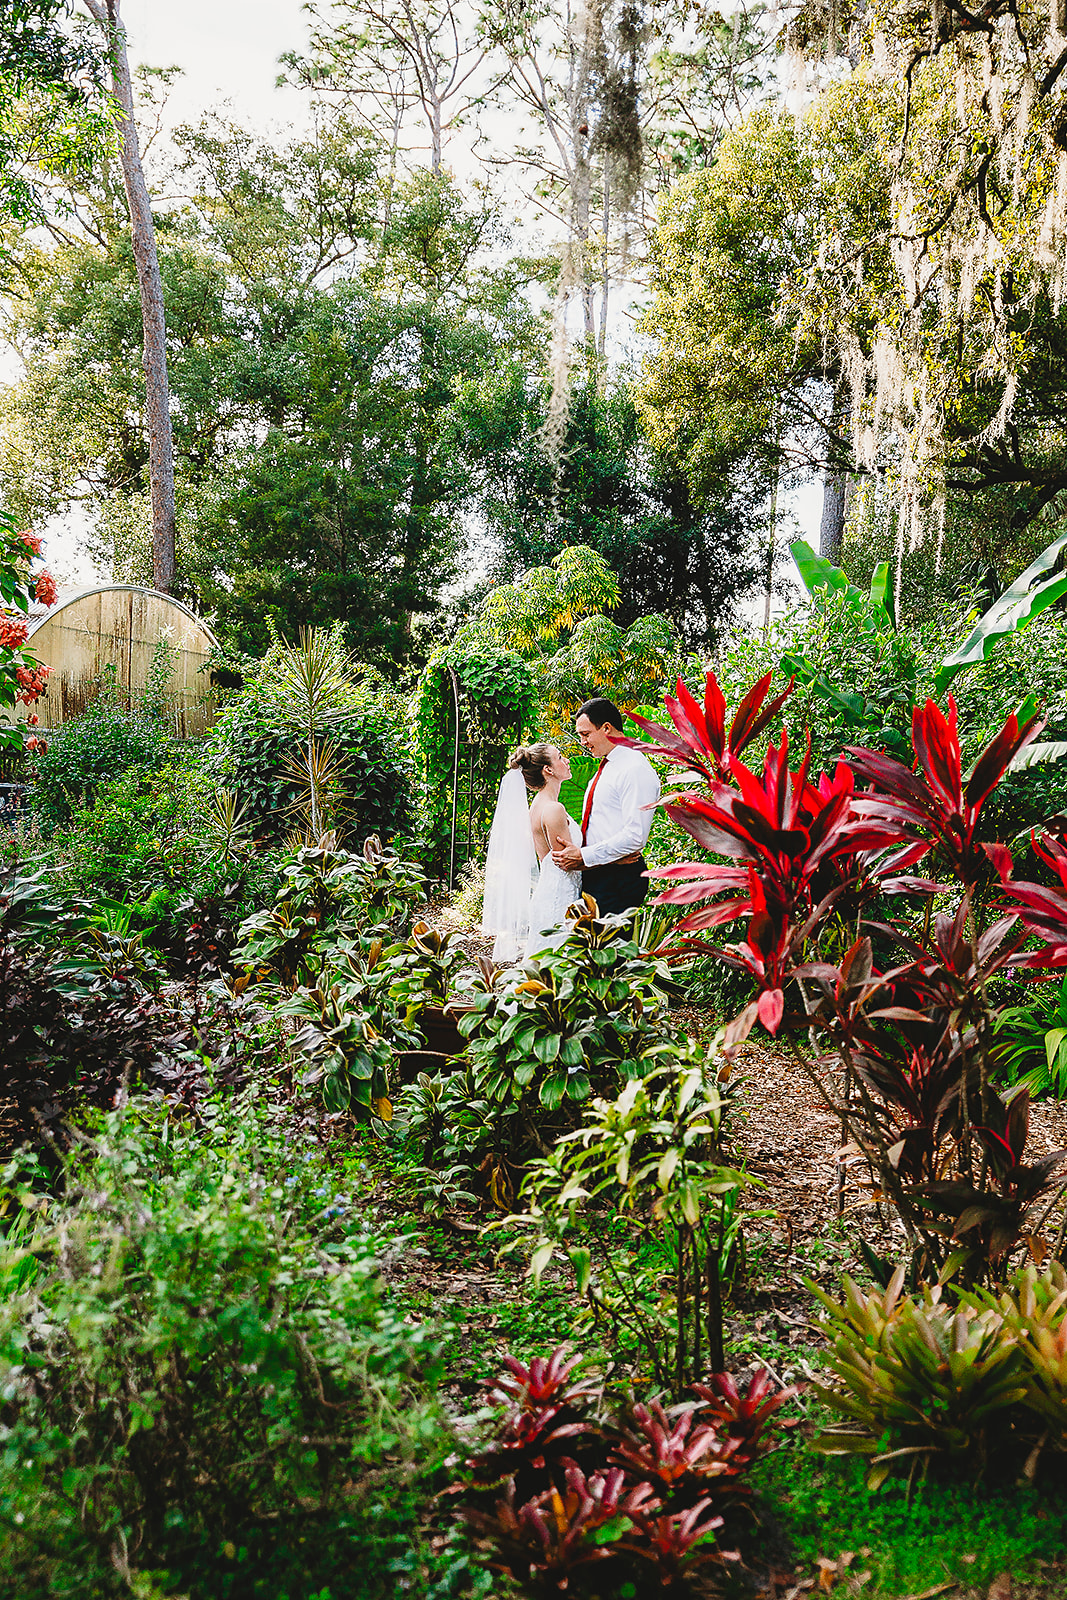 azalea lodge at mead botanical garden - outdoor event - orlando event venue